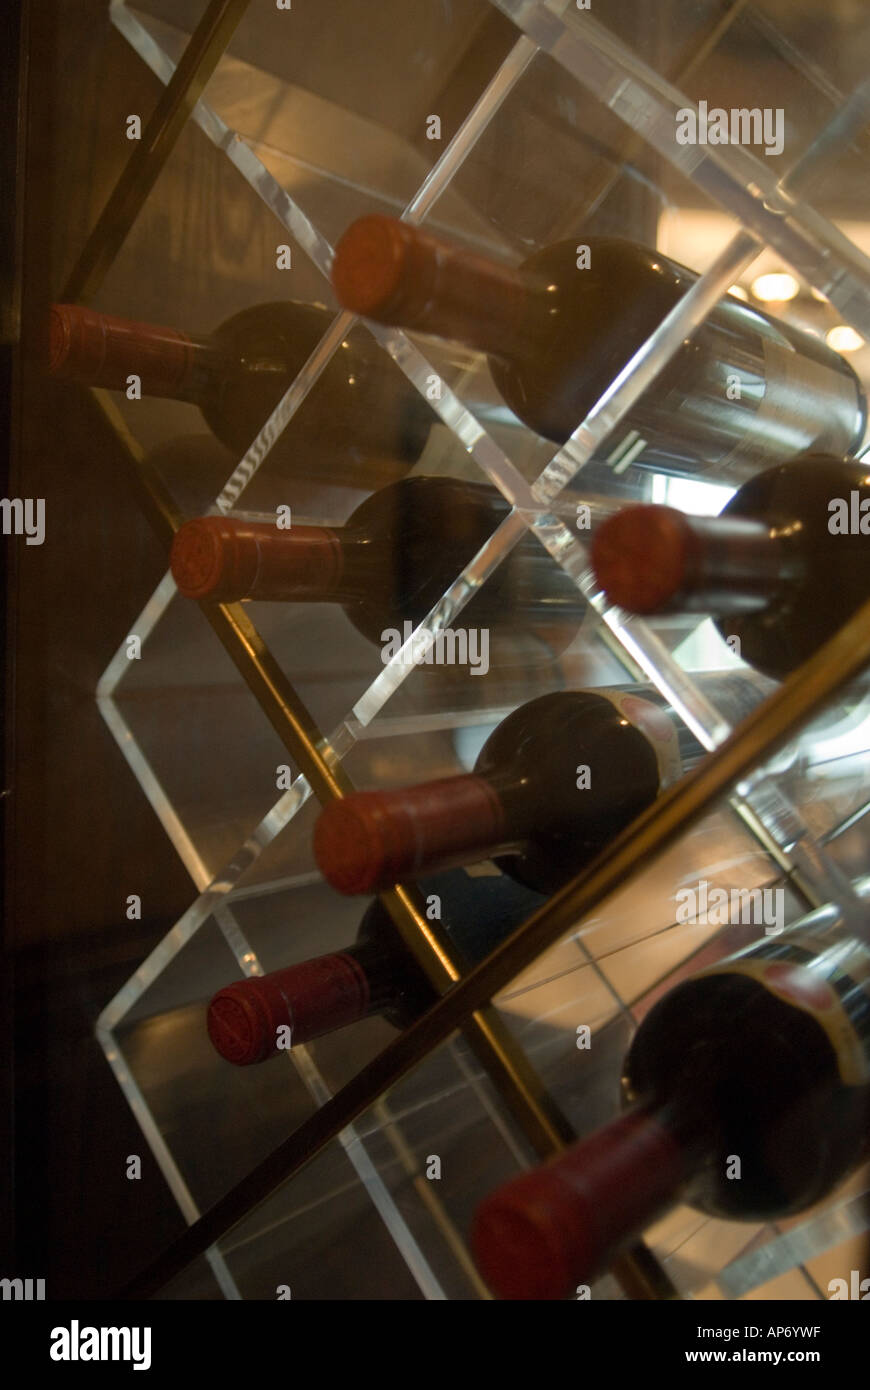 Wine bottles in a wine rack Stock Photo